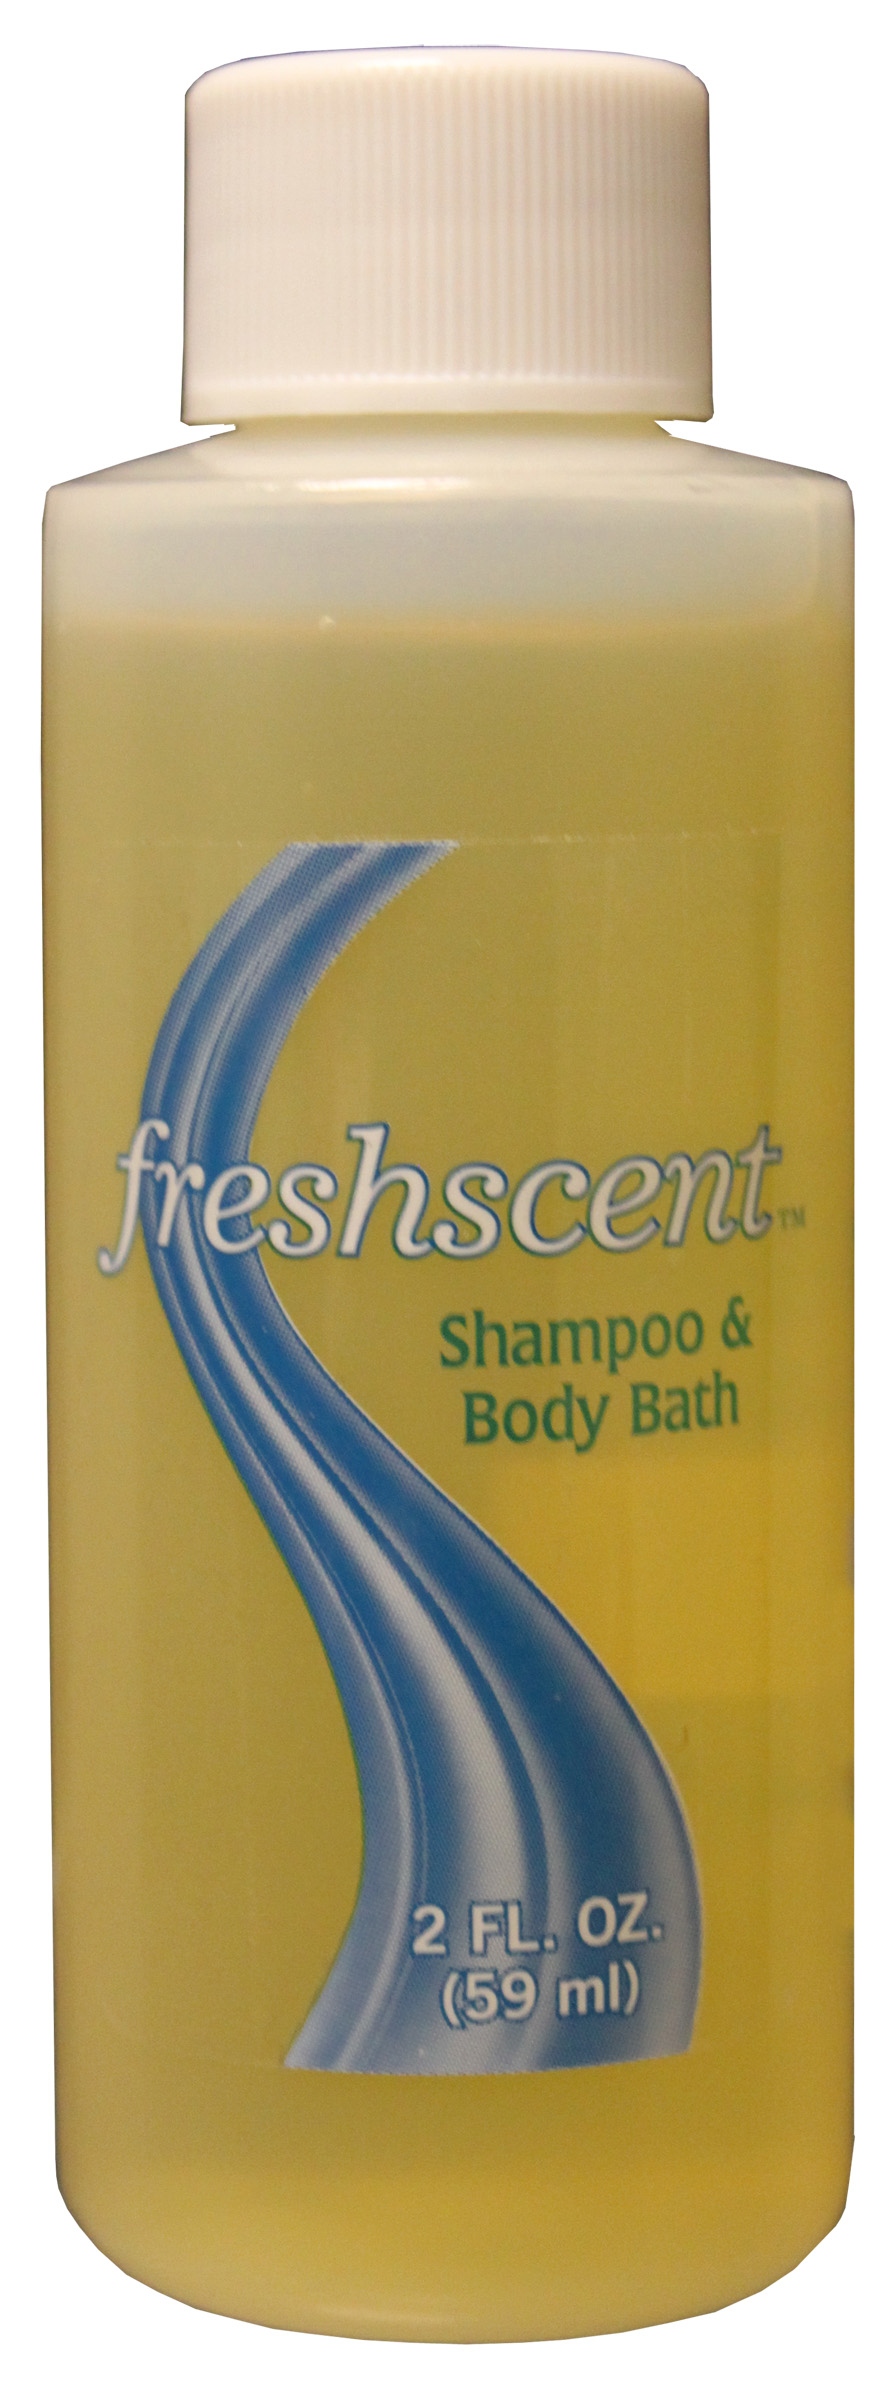 Freshscent 2 oz. SHAMPOO & Body Wash